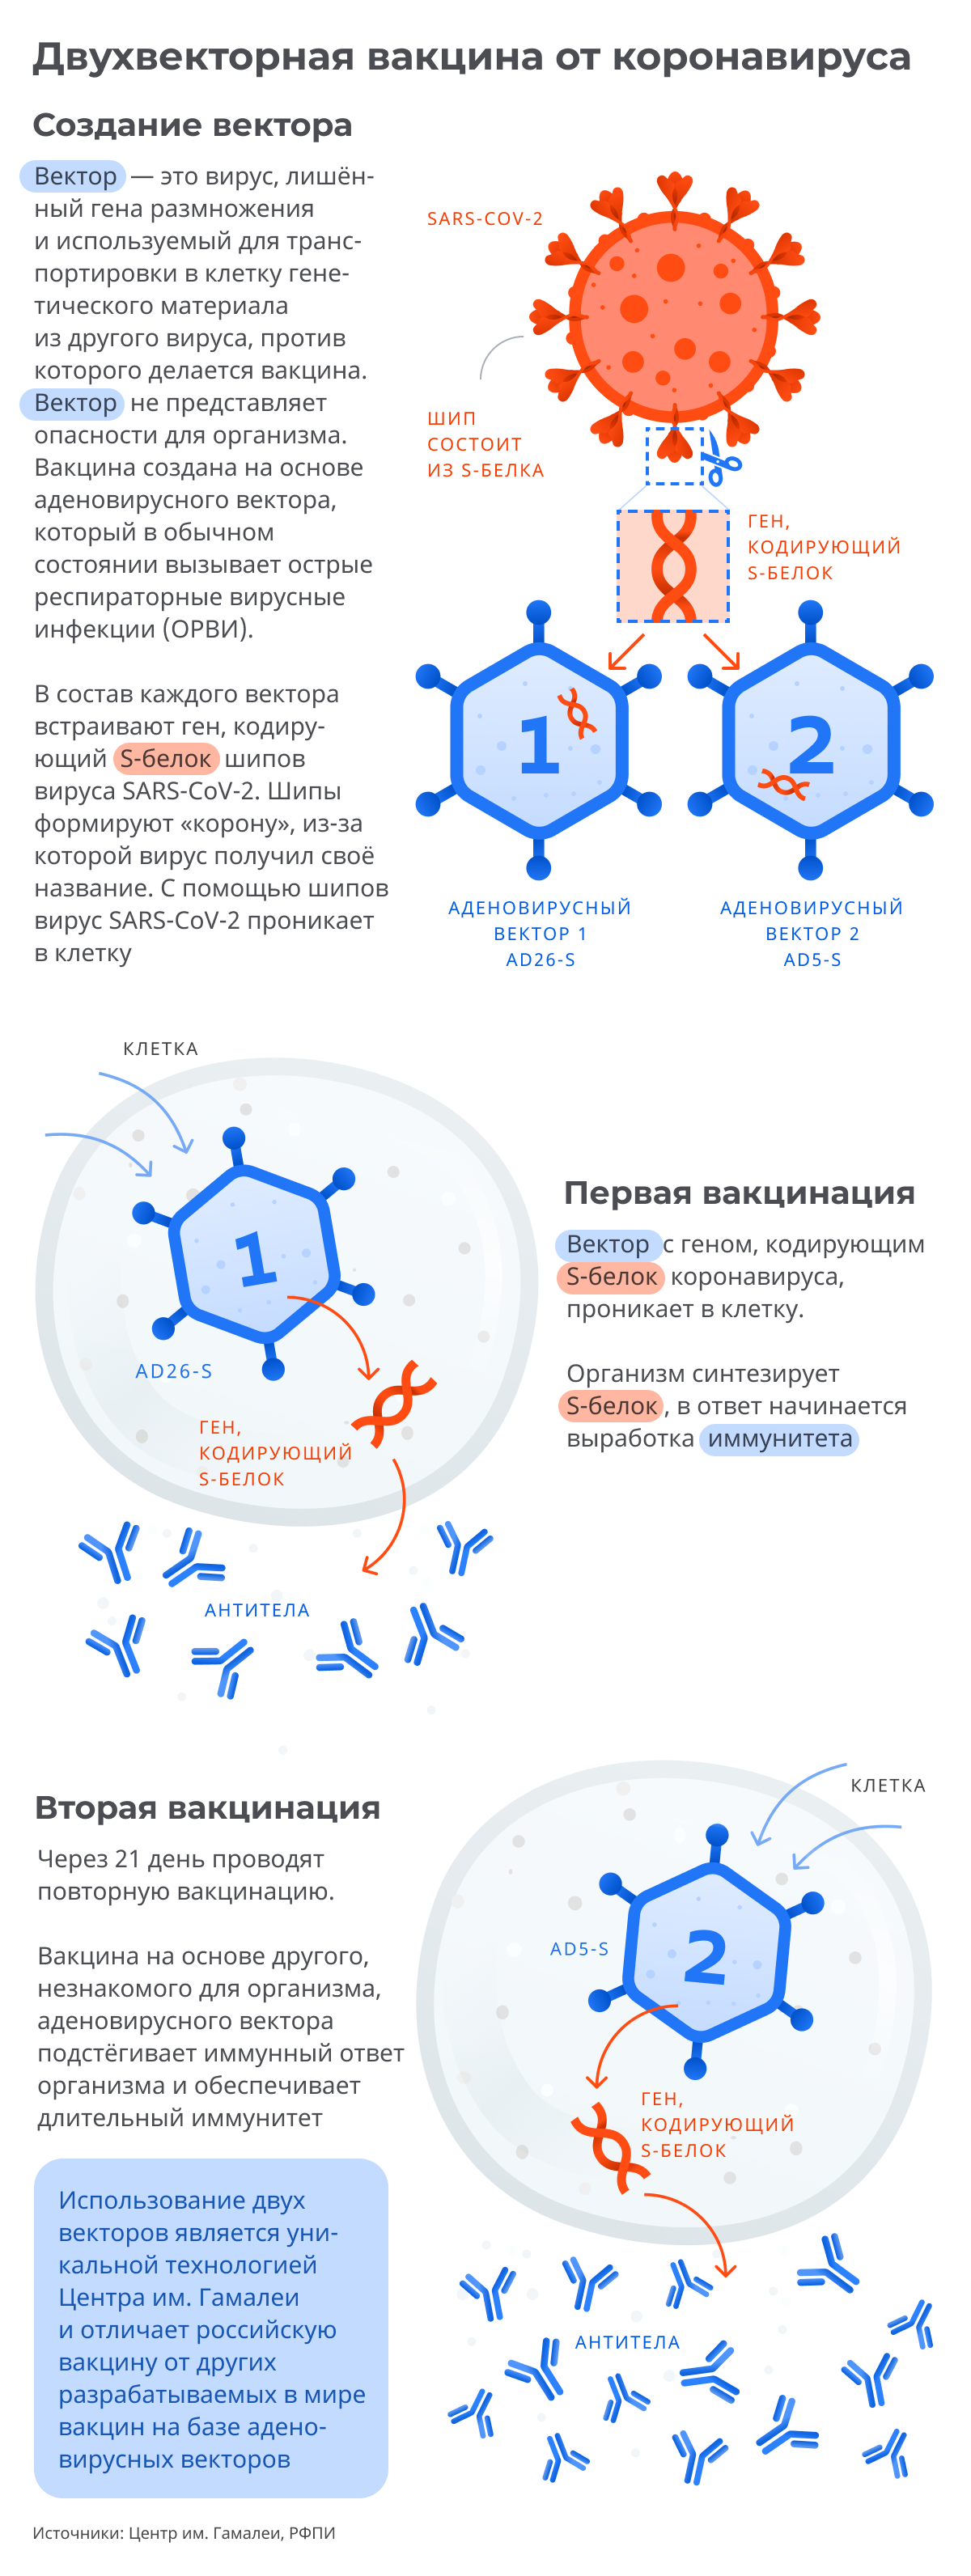 Вакцину назвали спутник. Вакцинация Covid-19 Спутник v. Вакцины от коронавируса в России. Состав вакцины от коронавируса. Вакцинация от коронавируса инфографика.